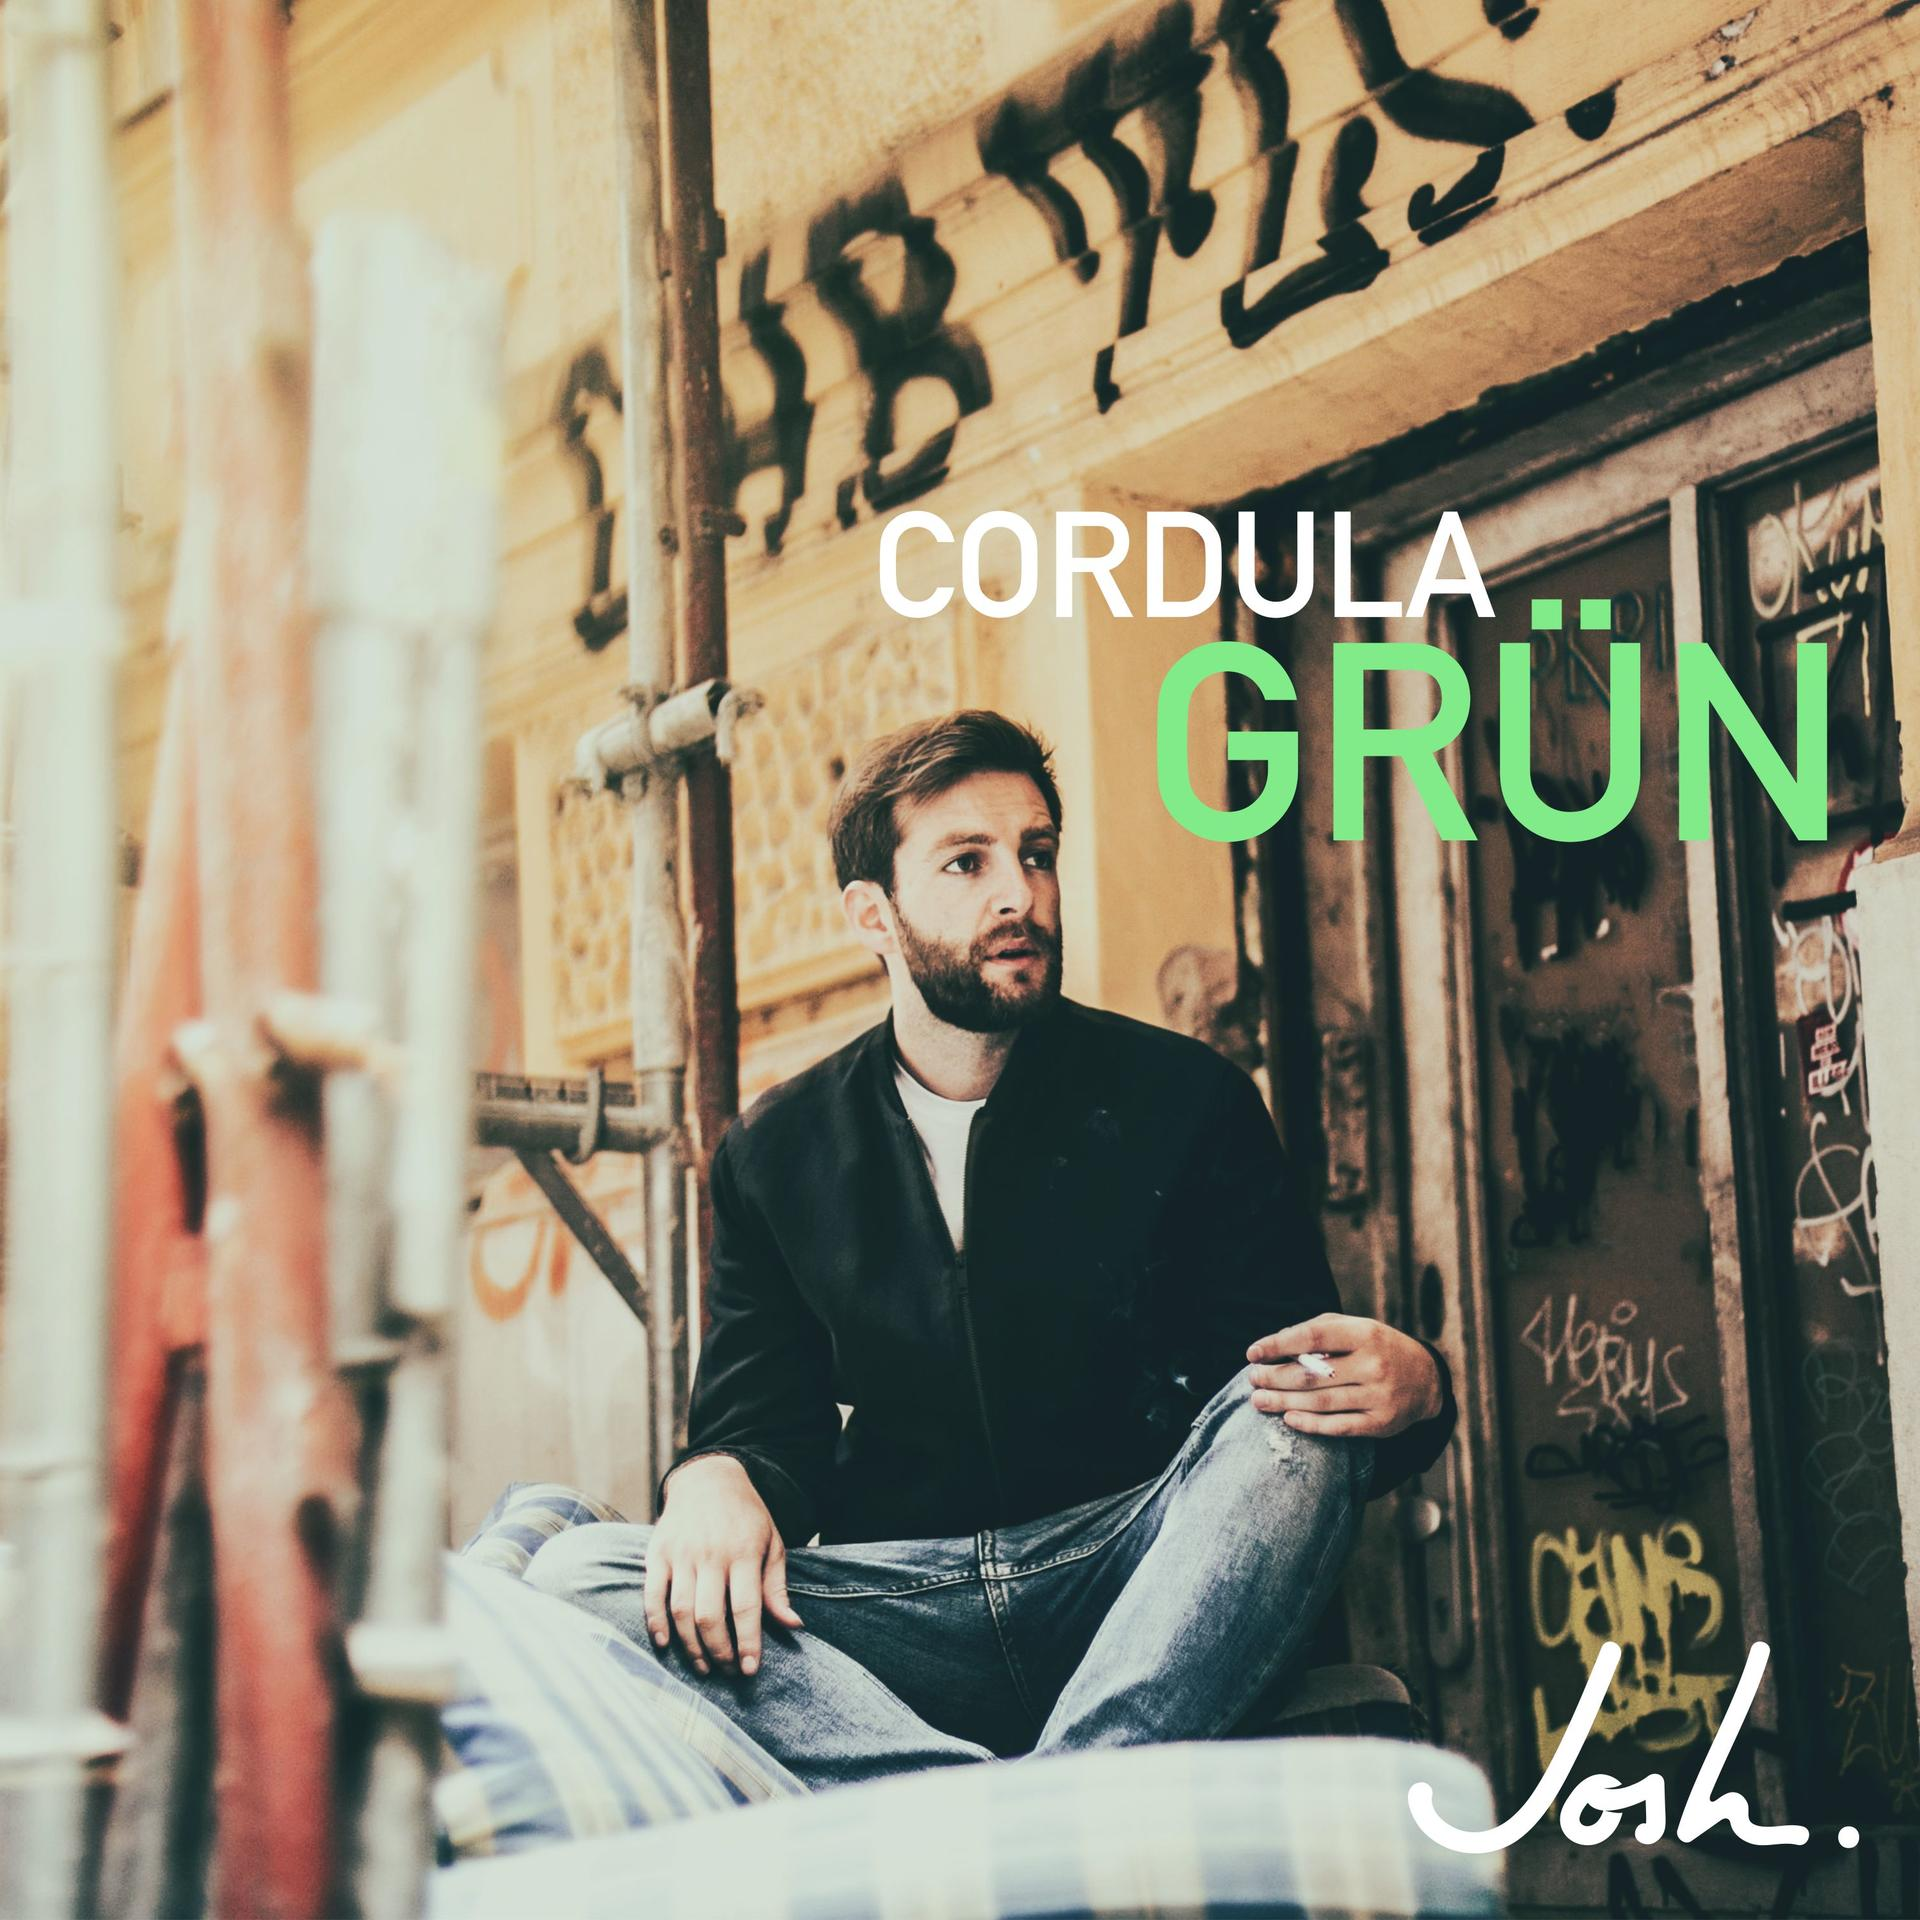 Single Zoll (5 Grün CD - Josh - Cordula (2-Track)) (2-Track)